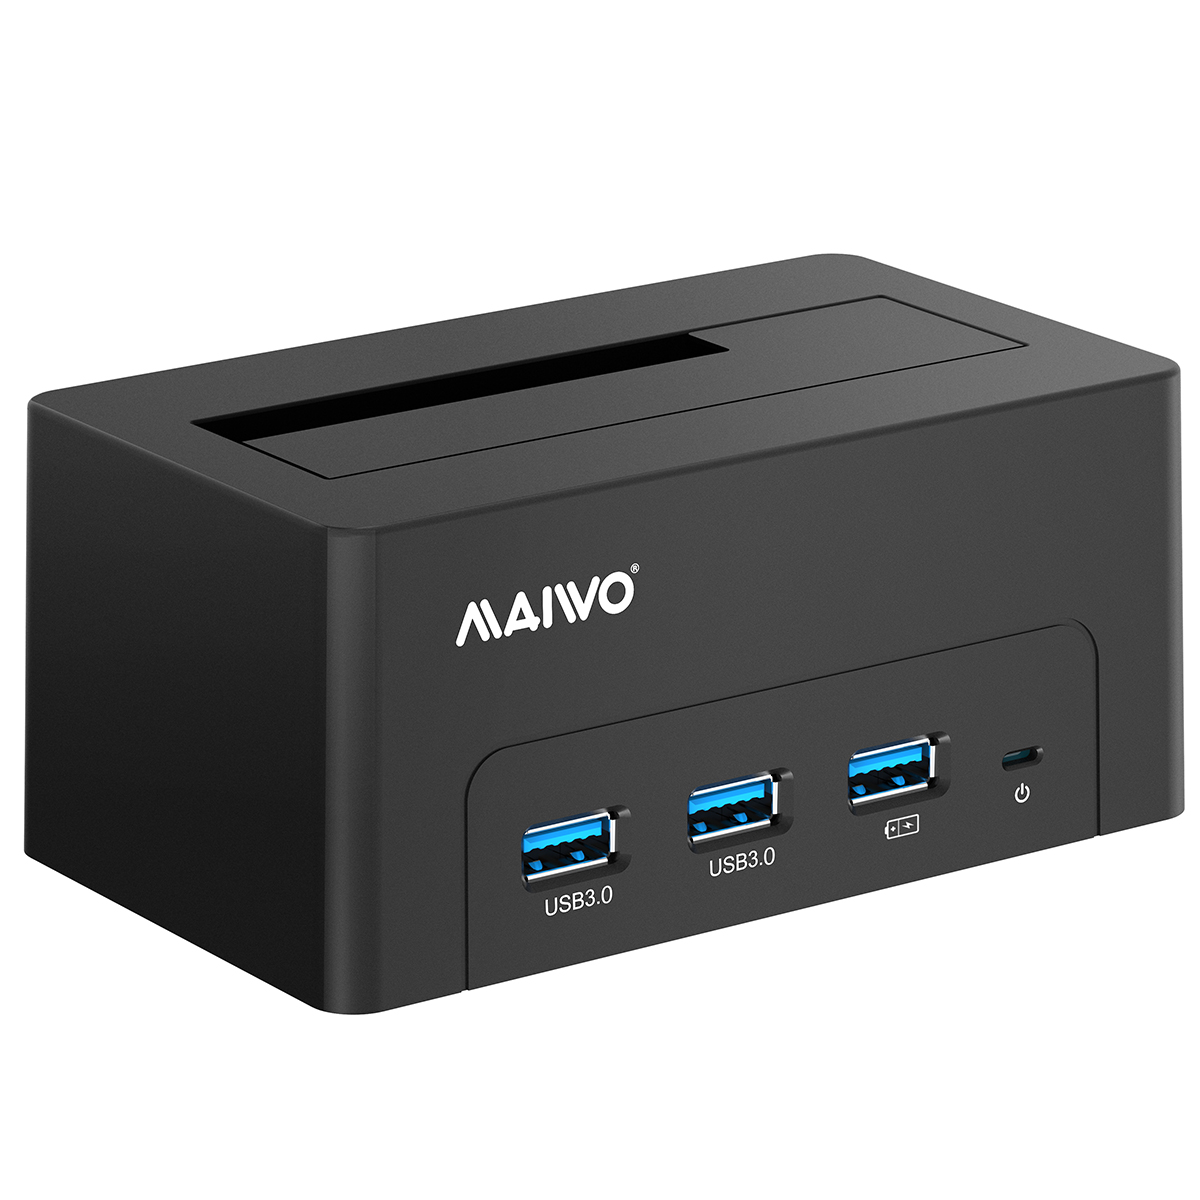 MAIWO K308H USB 3.0 to SATA Hard Drive Docking Station External Enclosure Adapter for 2.5 & 3.5 